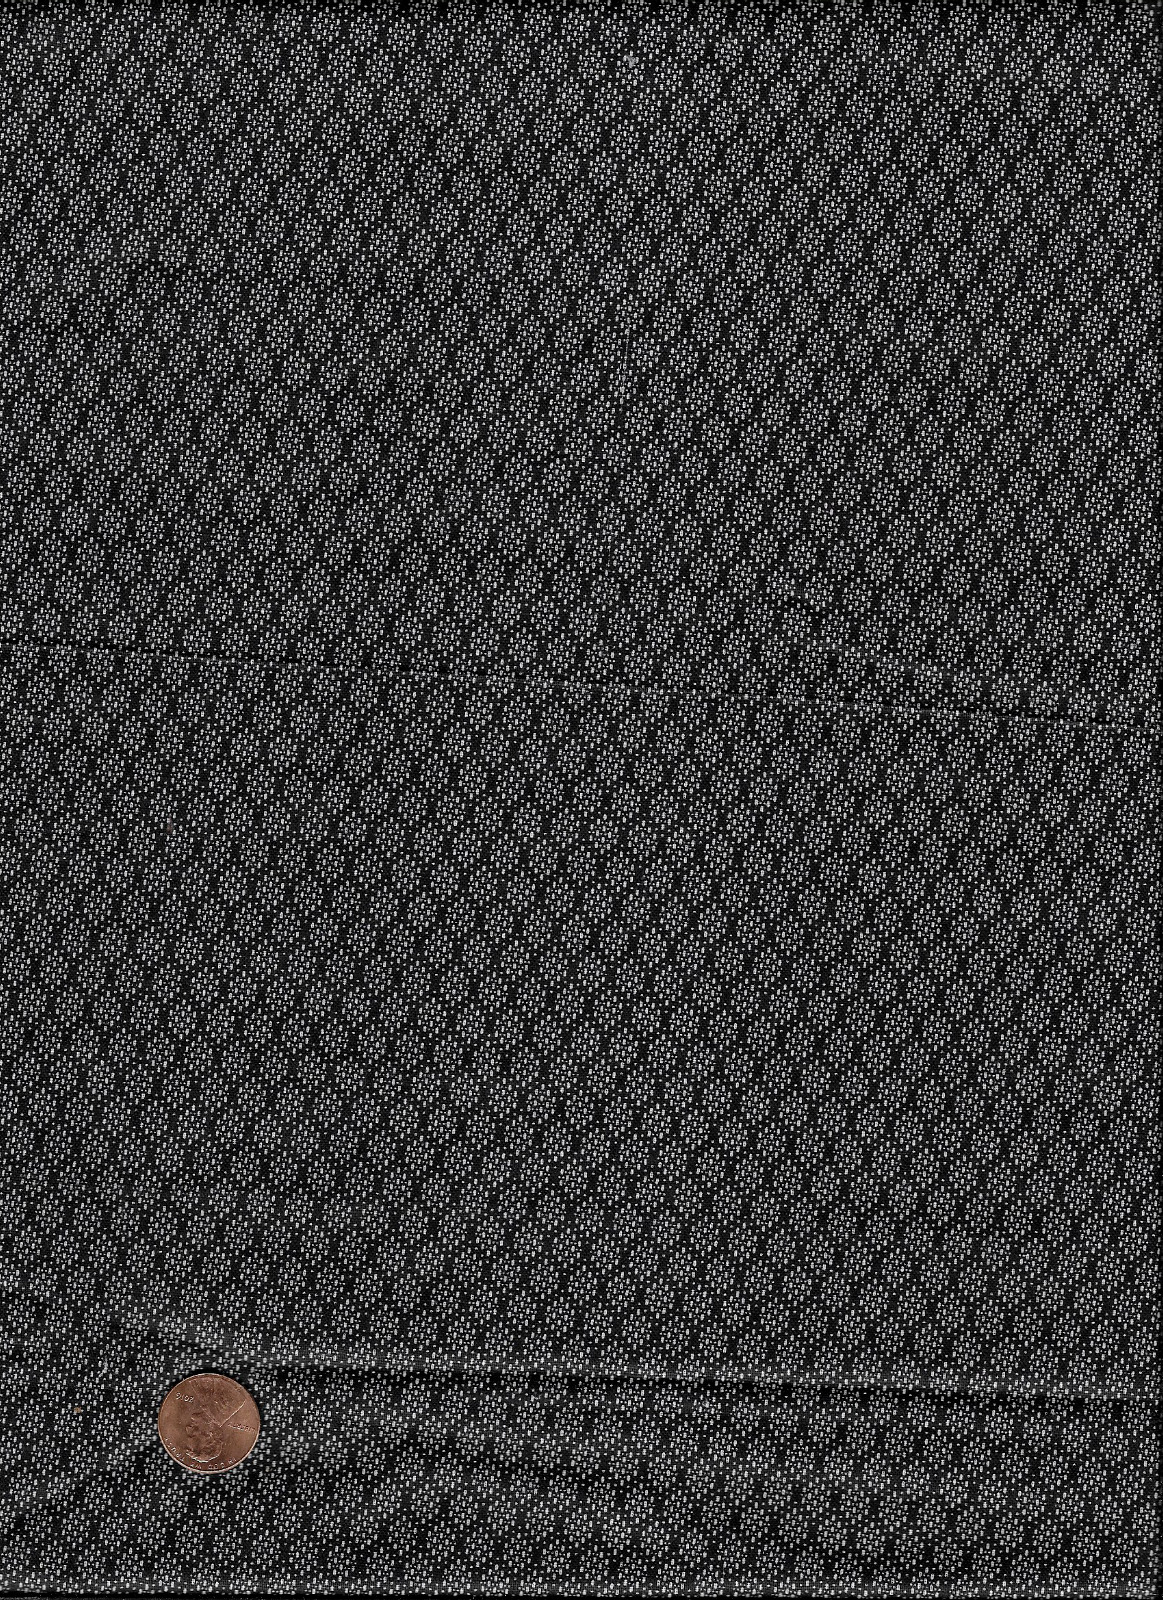 Antique 1890 Black Polka Dot Honeycomb Fabric